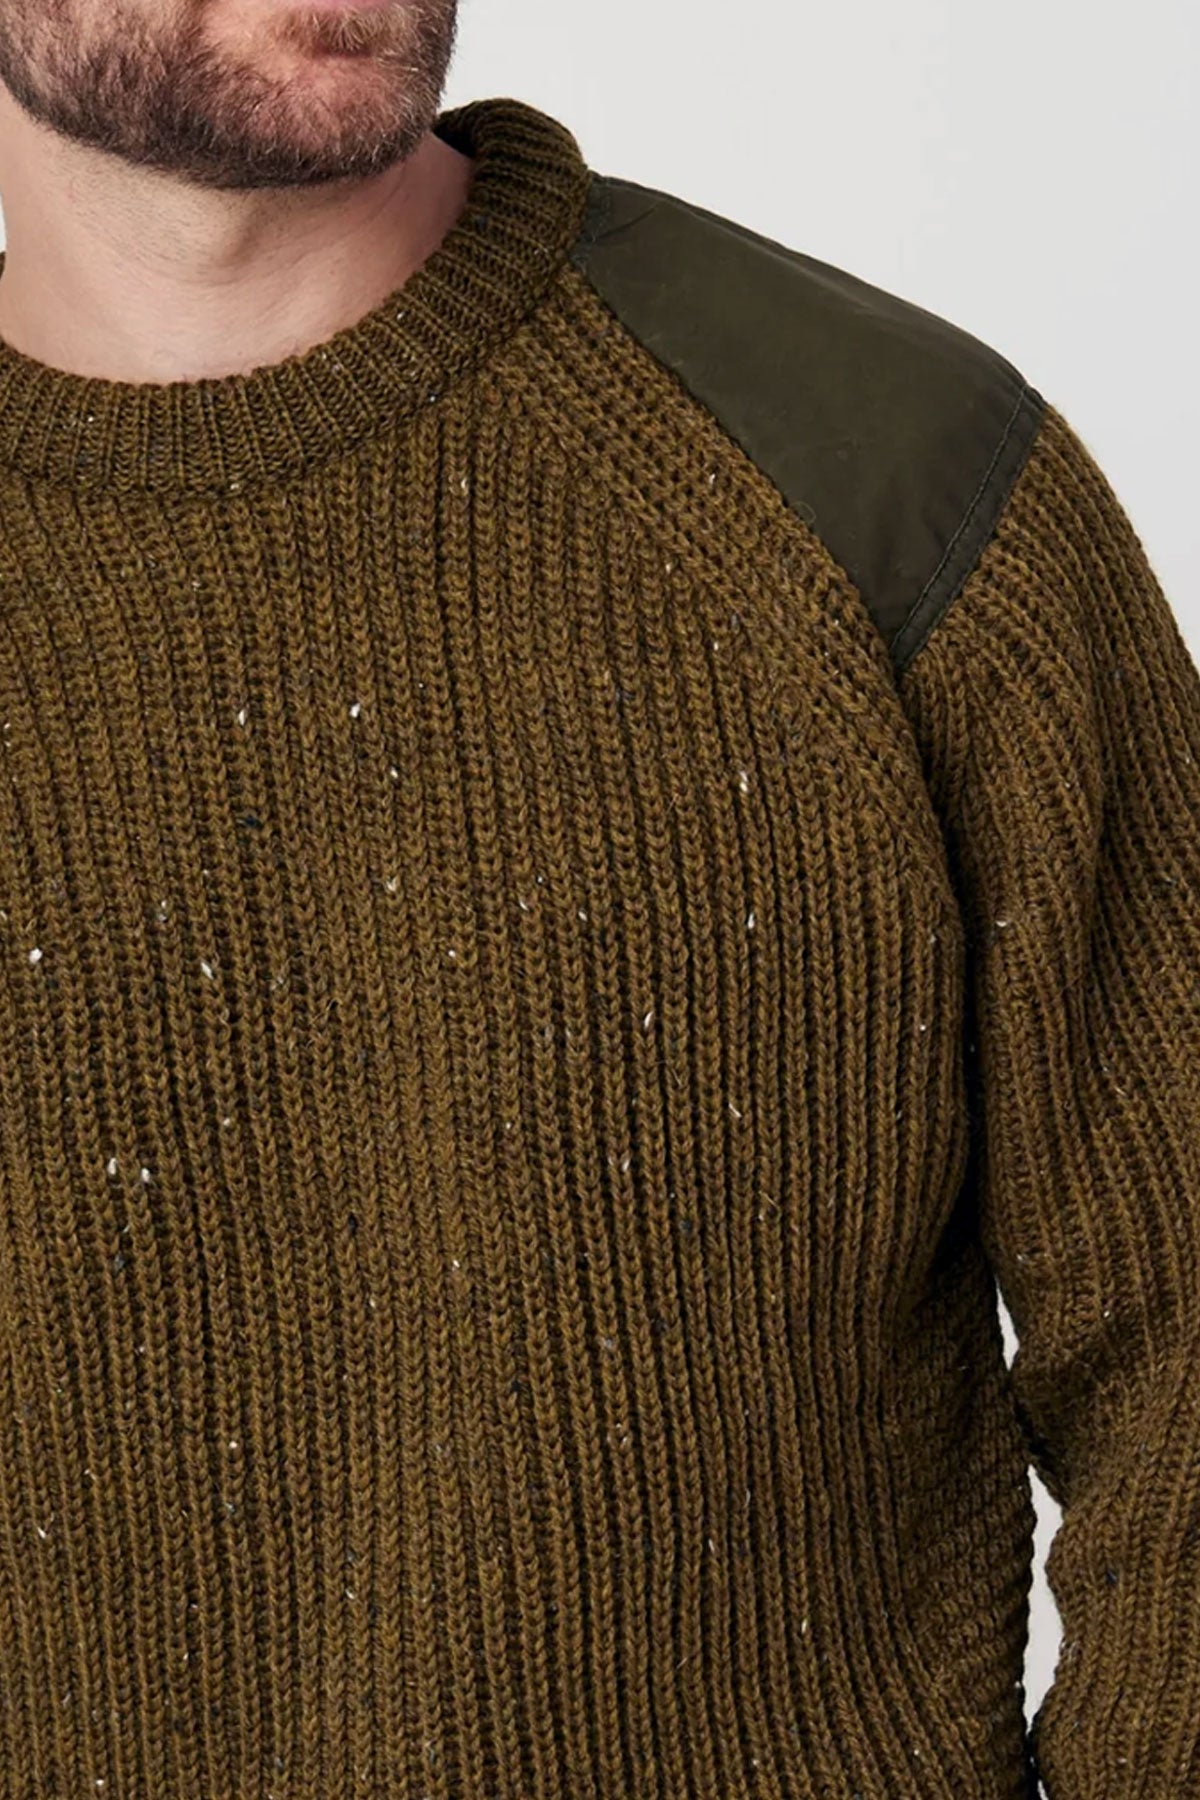 Peregrine - Commando Sweater in British Khaki